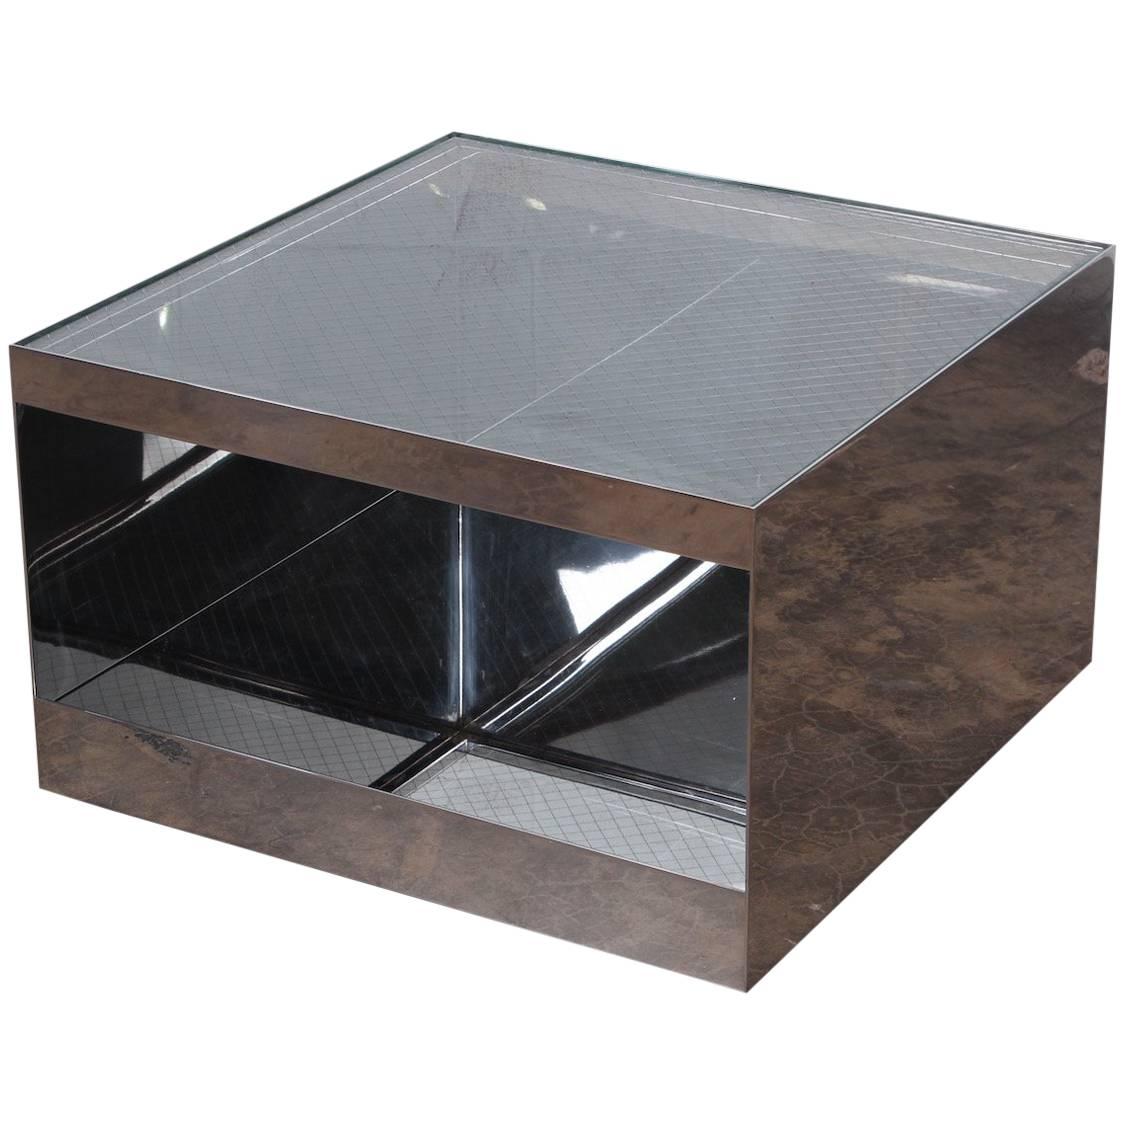 Joe D'urso Polished Stainless Steel Table